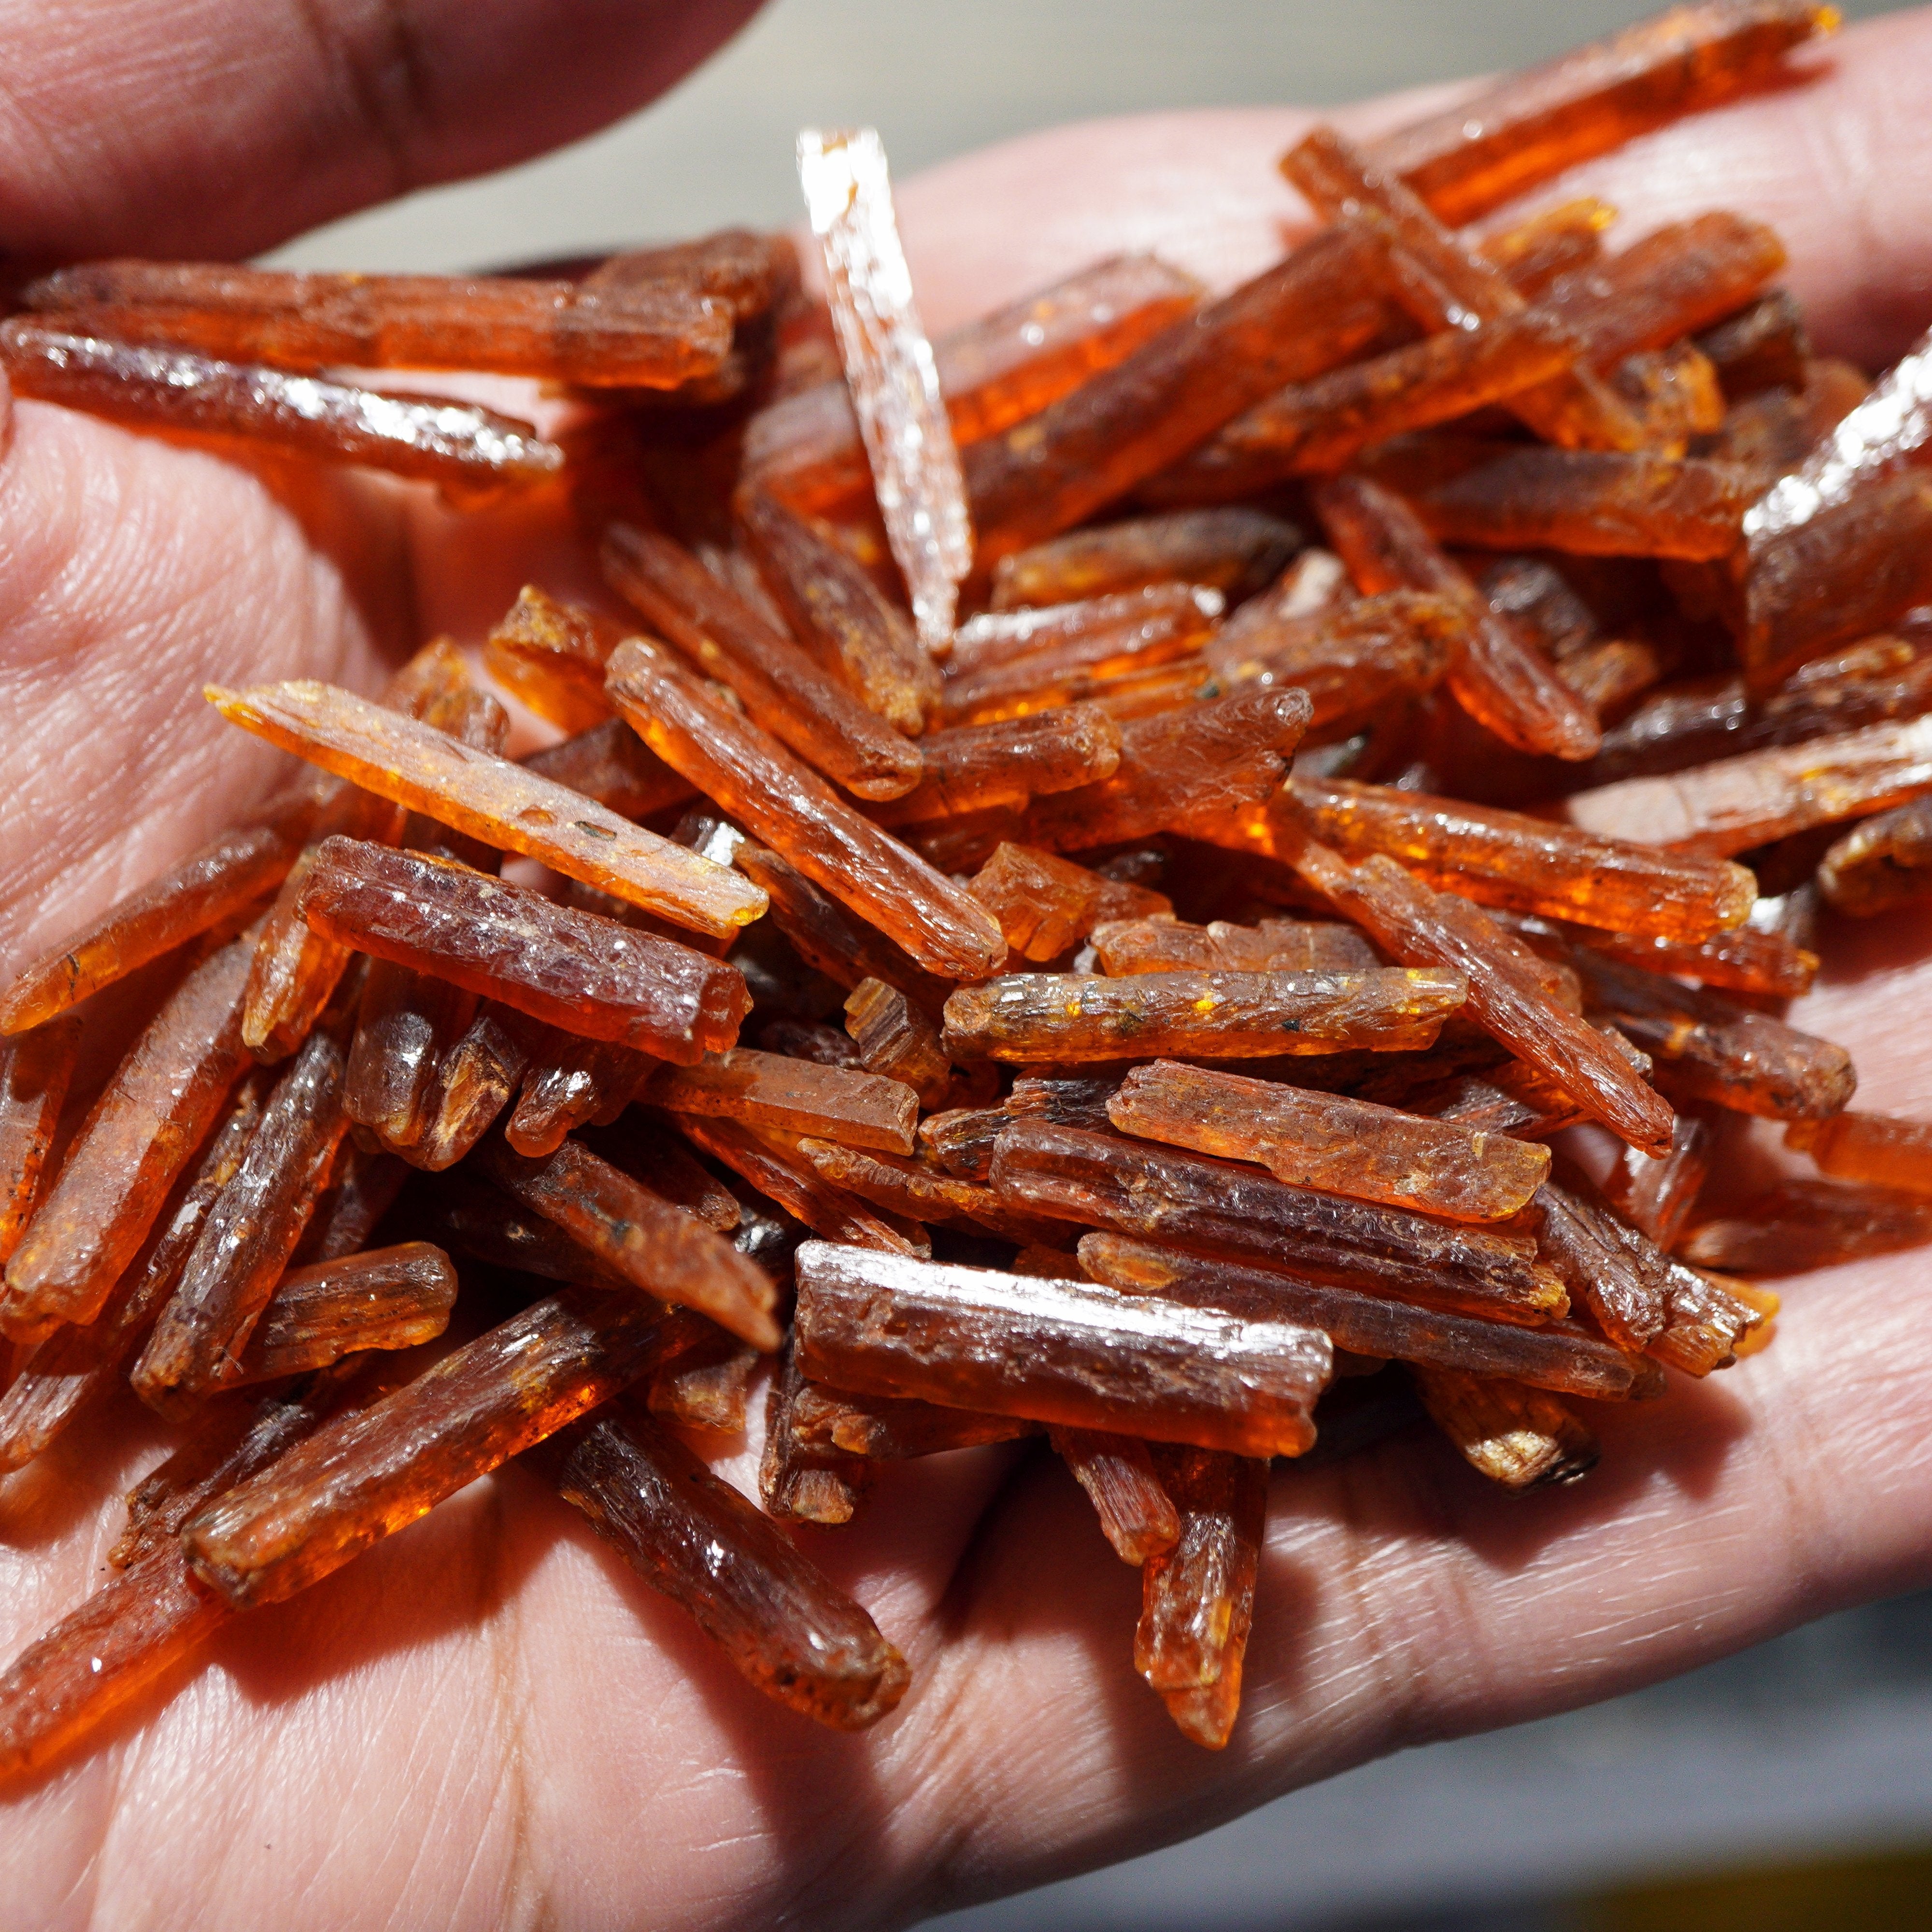 Superior Quality - Orange Kyanite Tanzania. 3.5Ct-10Ct Pieces @$7/stone On Blind Pour Basis. We